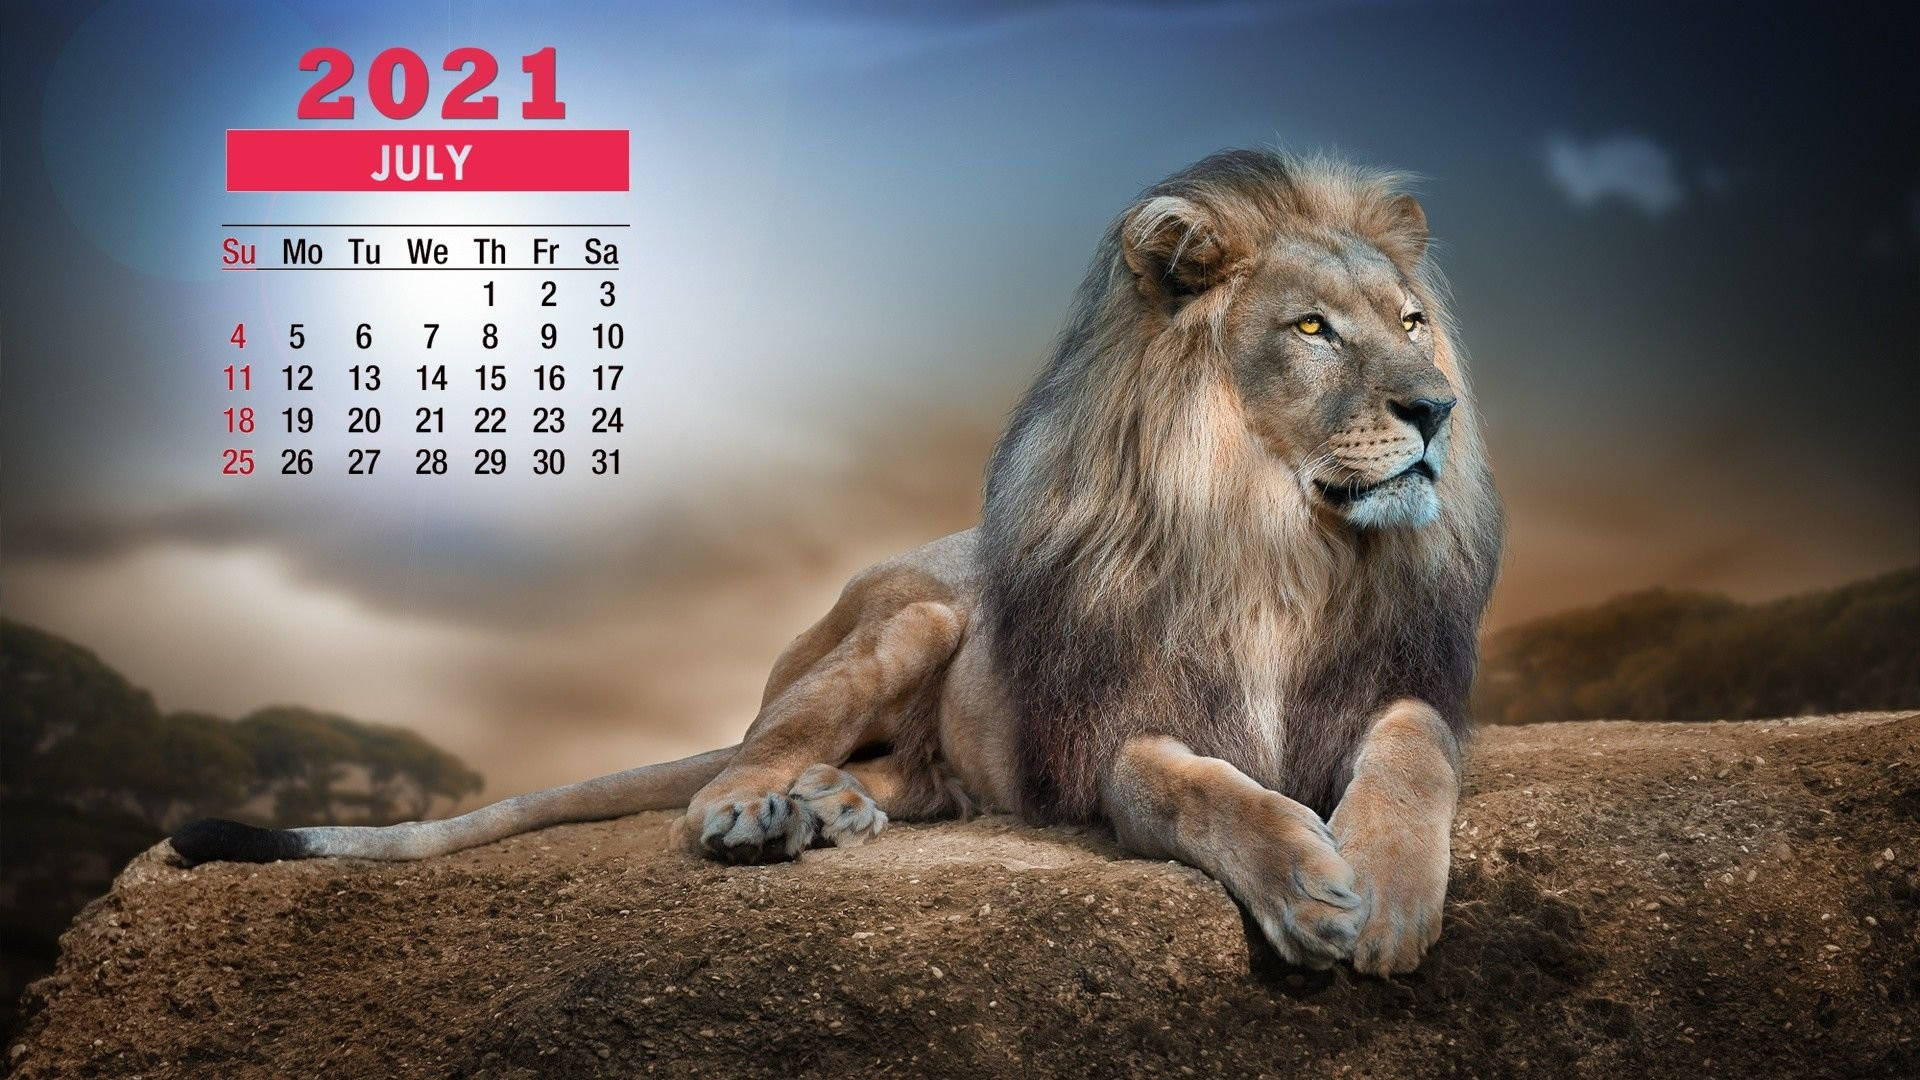 July 2021 Calendar With A Lion